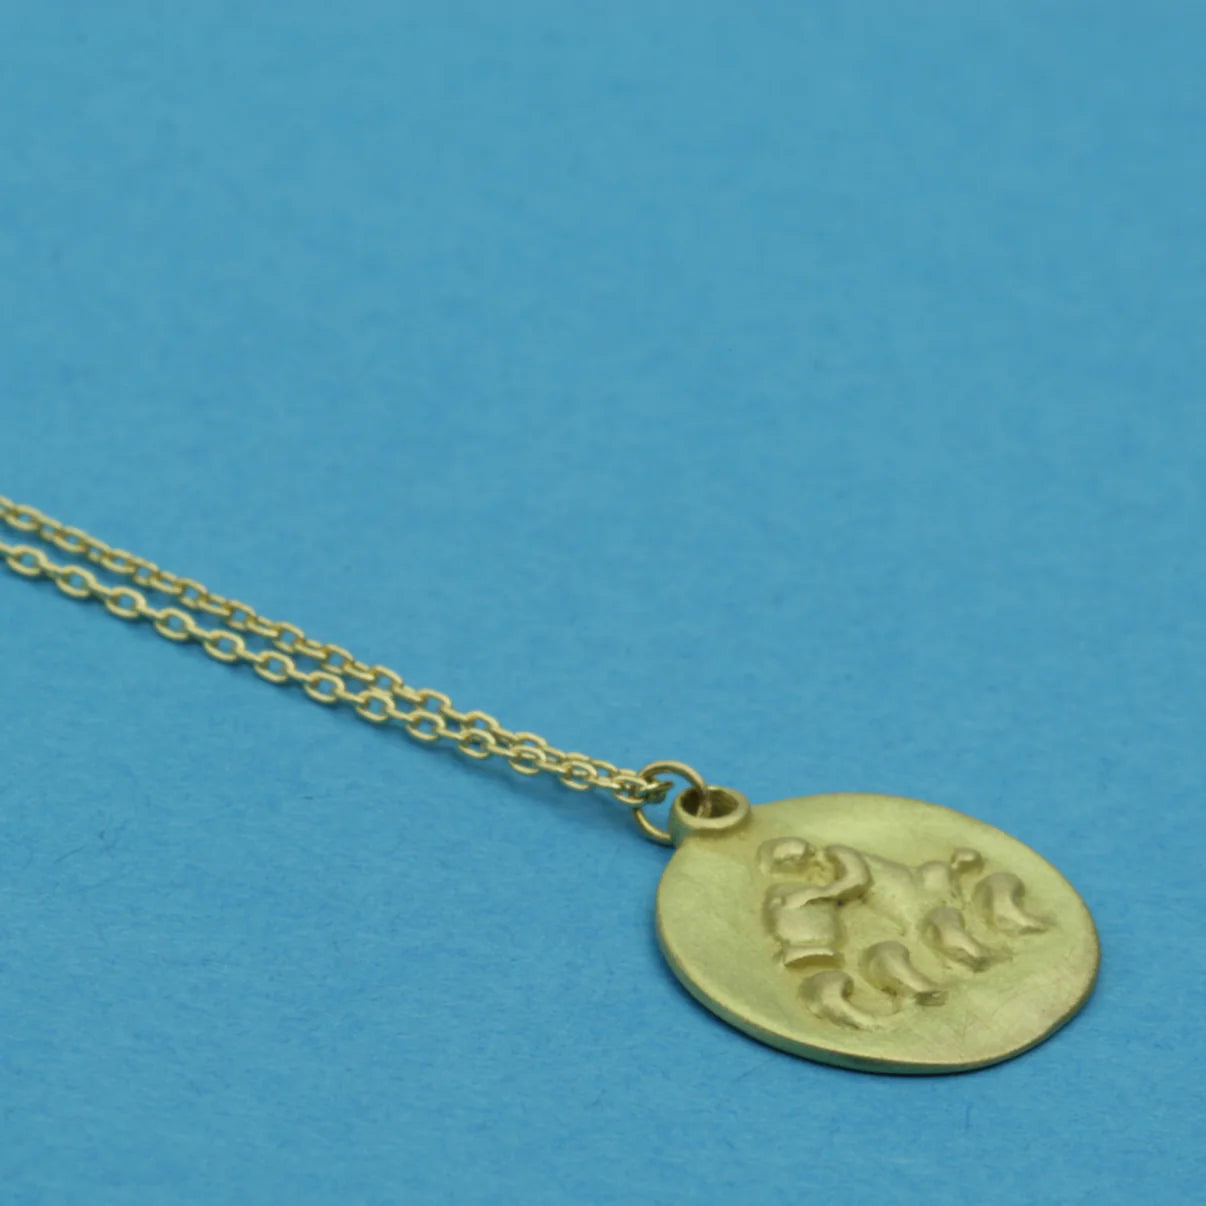 zodiac medal pendant necklace - aquarius